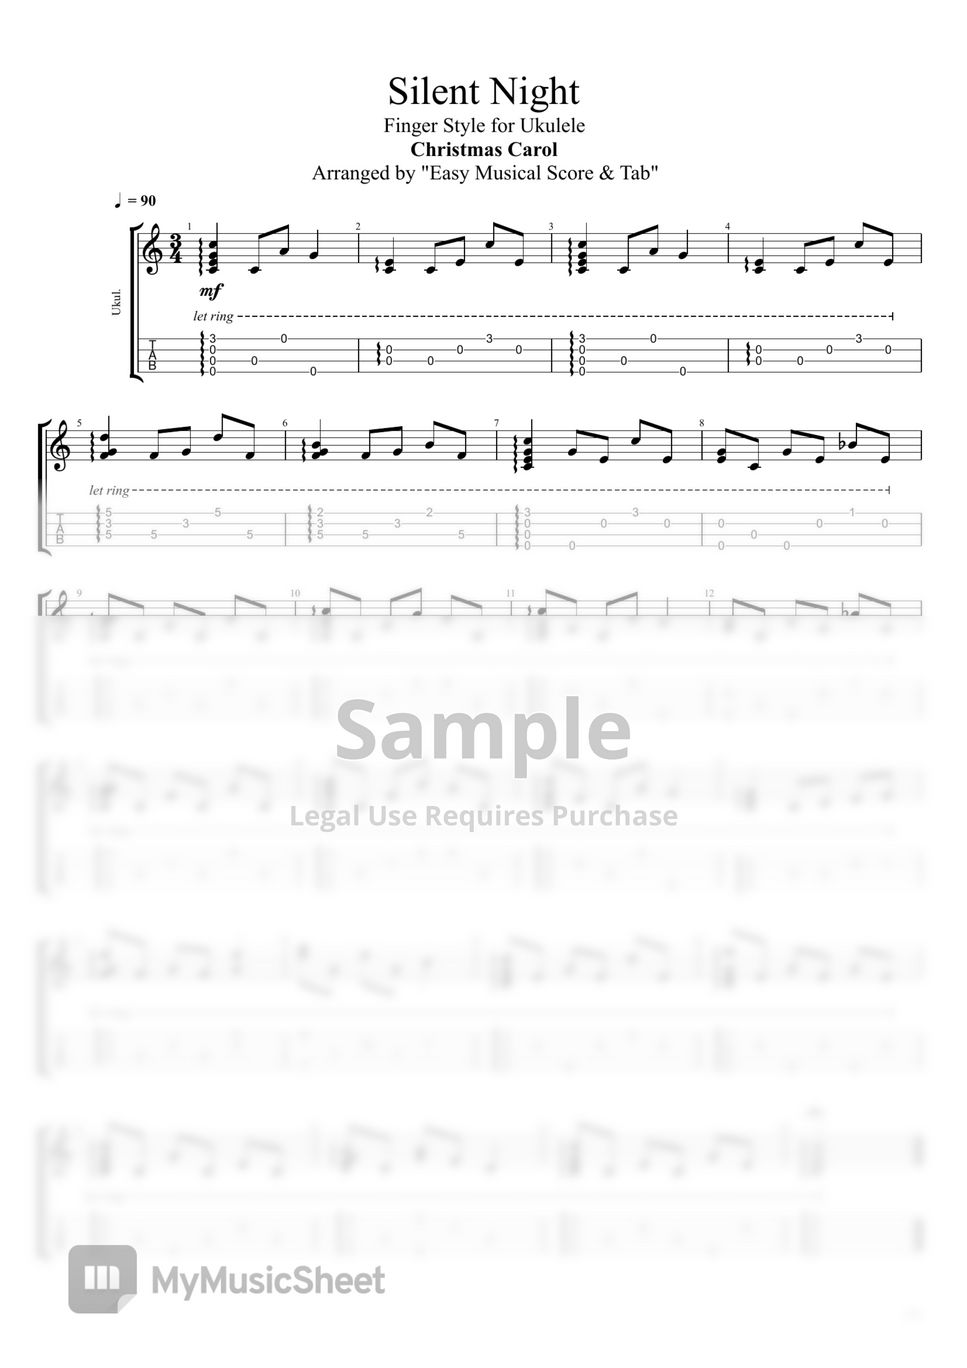 Christmas Carol - Silent Night (Easy Ukulele Finger Style Tab) by Easy Musical Score & Tab